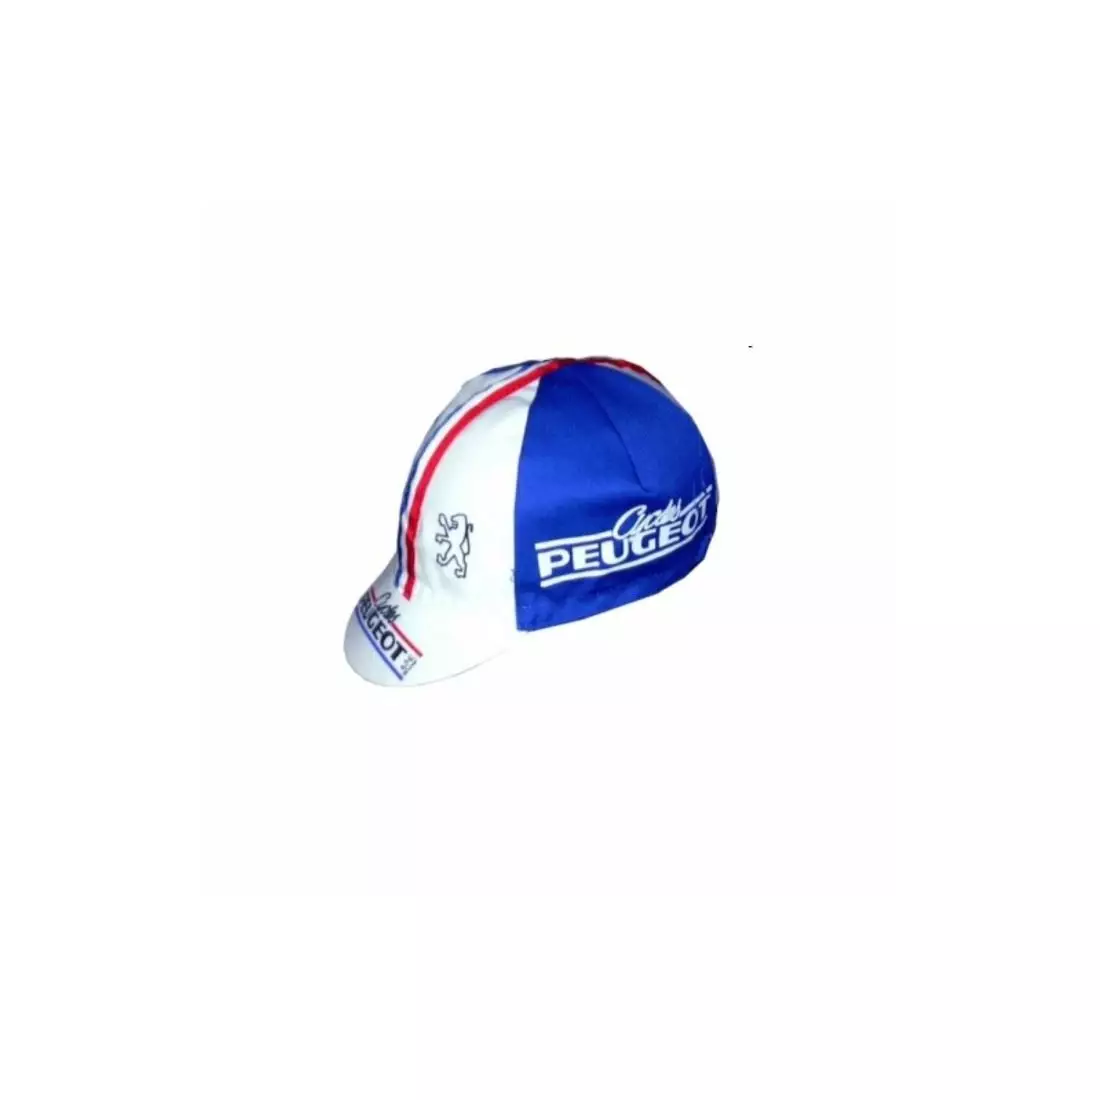 APIS PROFI PEUGEOT CYCLES cycling cap with visor